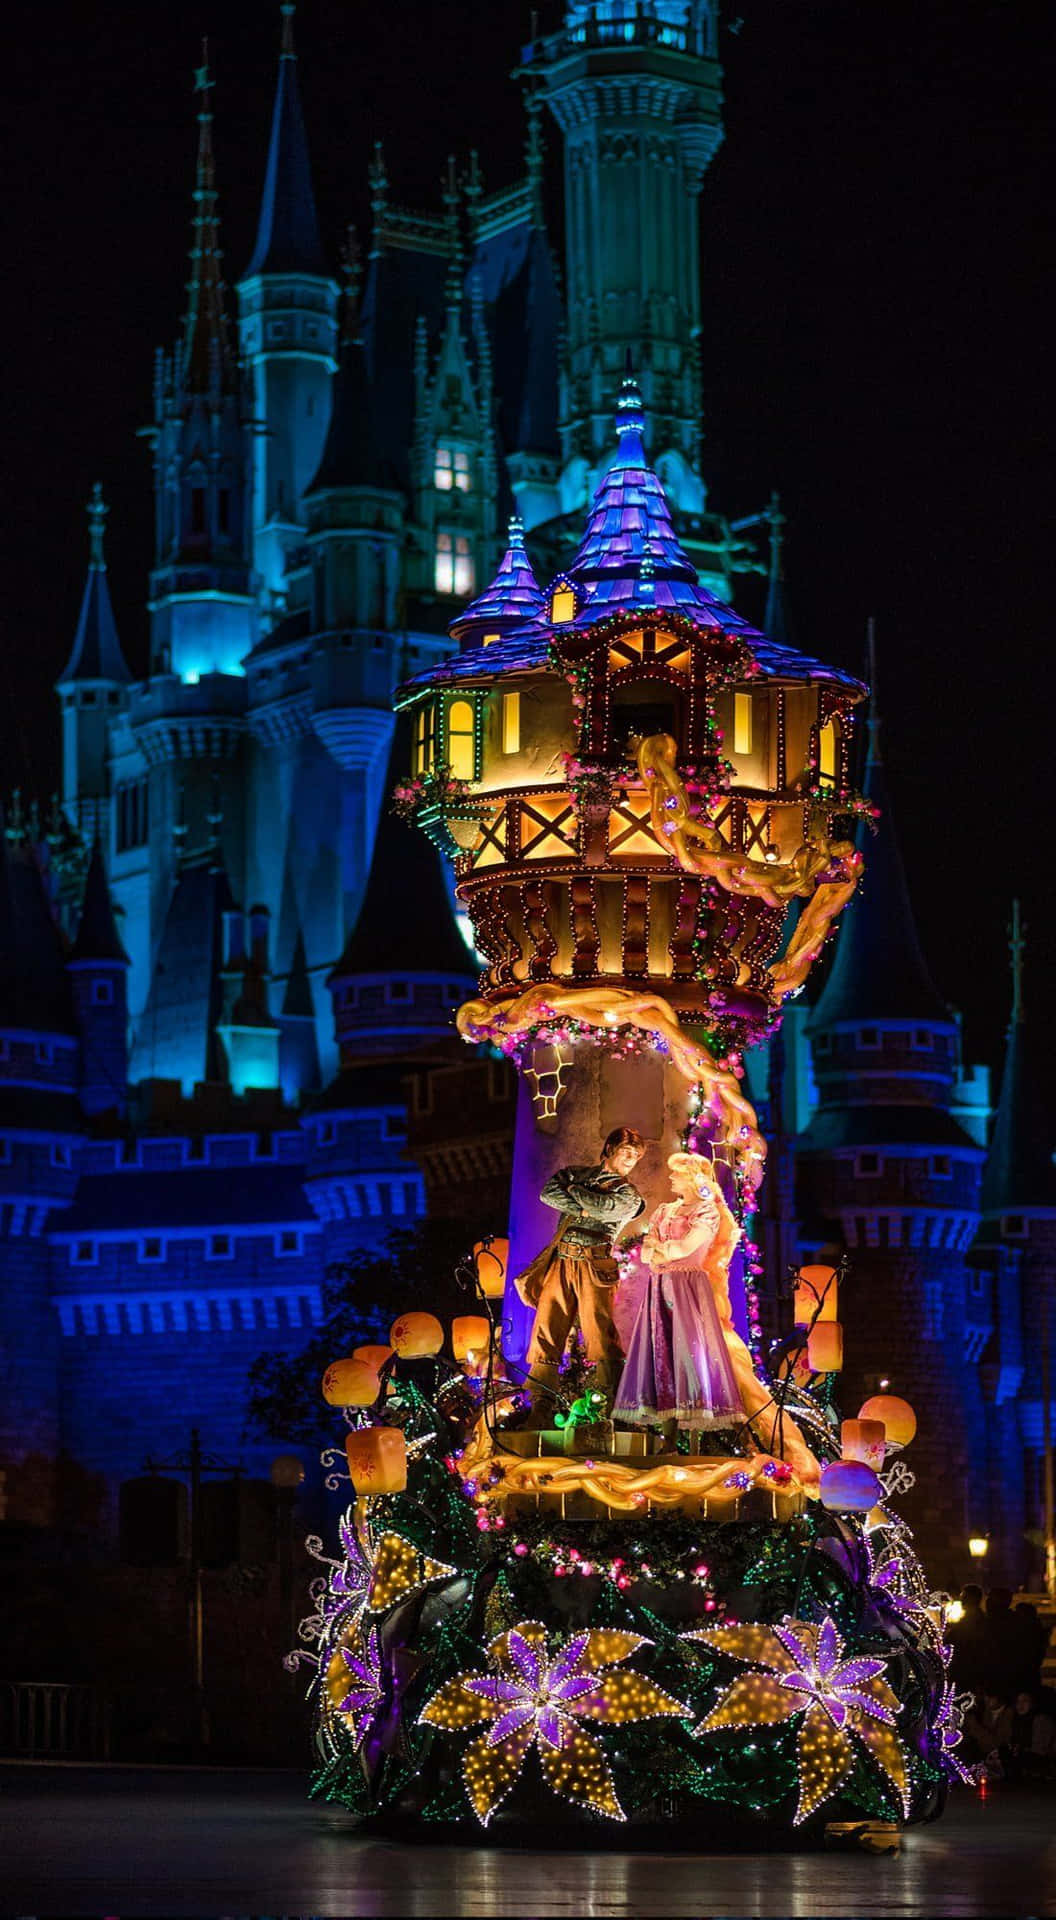 Magical Disney Castle under a Starry Night Sky Wallpaper